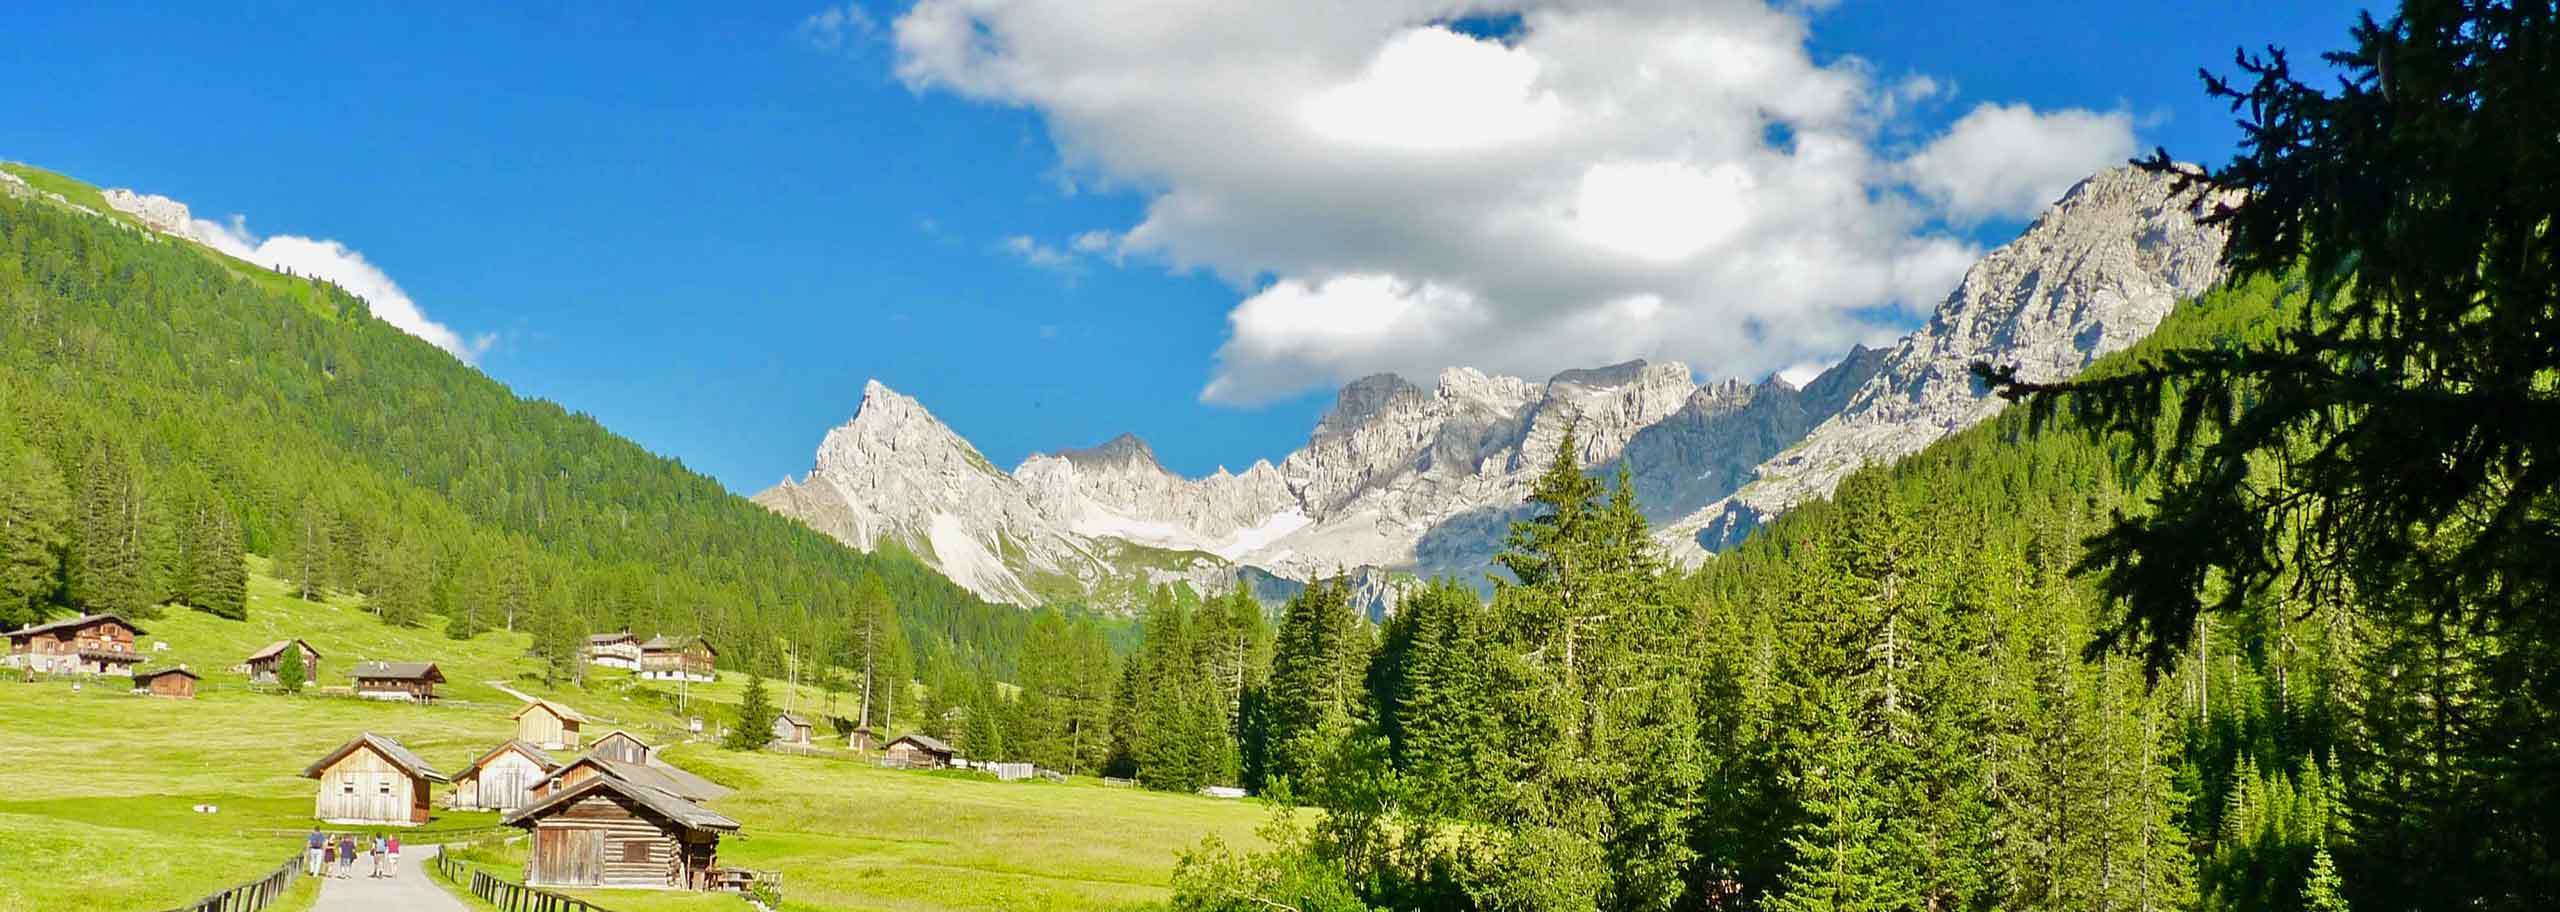 Trekking nelle Dolomiti di Brenta, Escursioni e Camminate Guidate